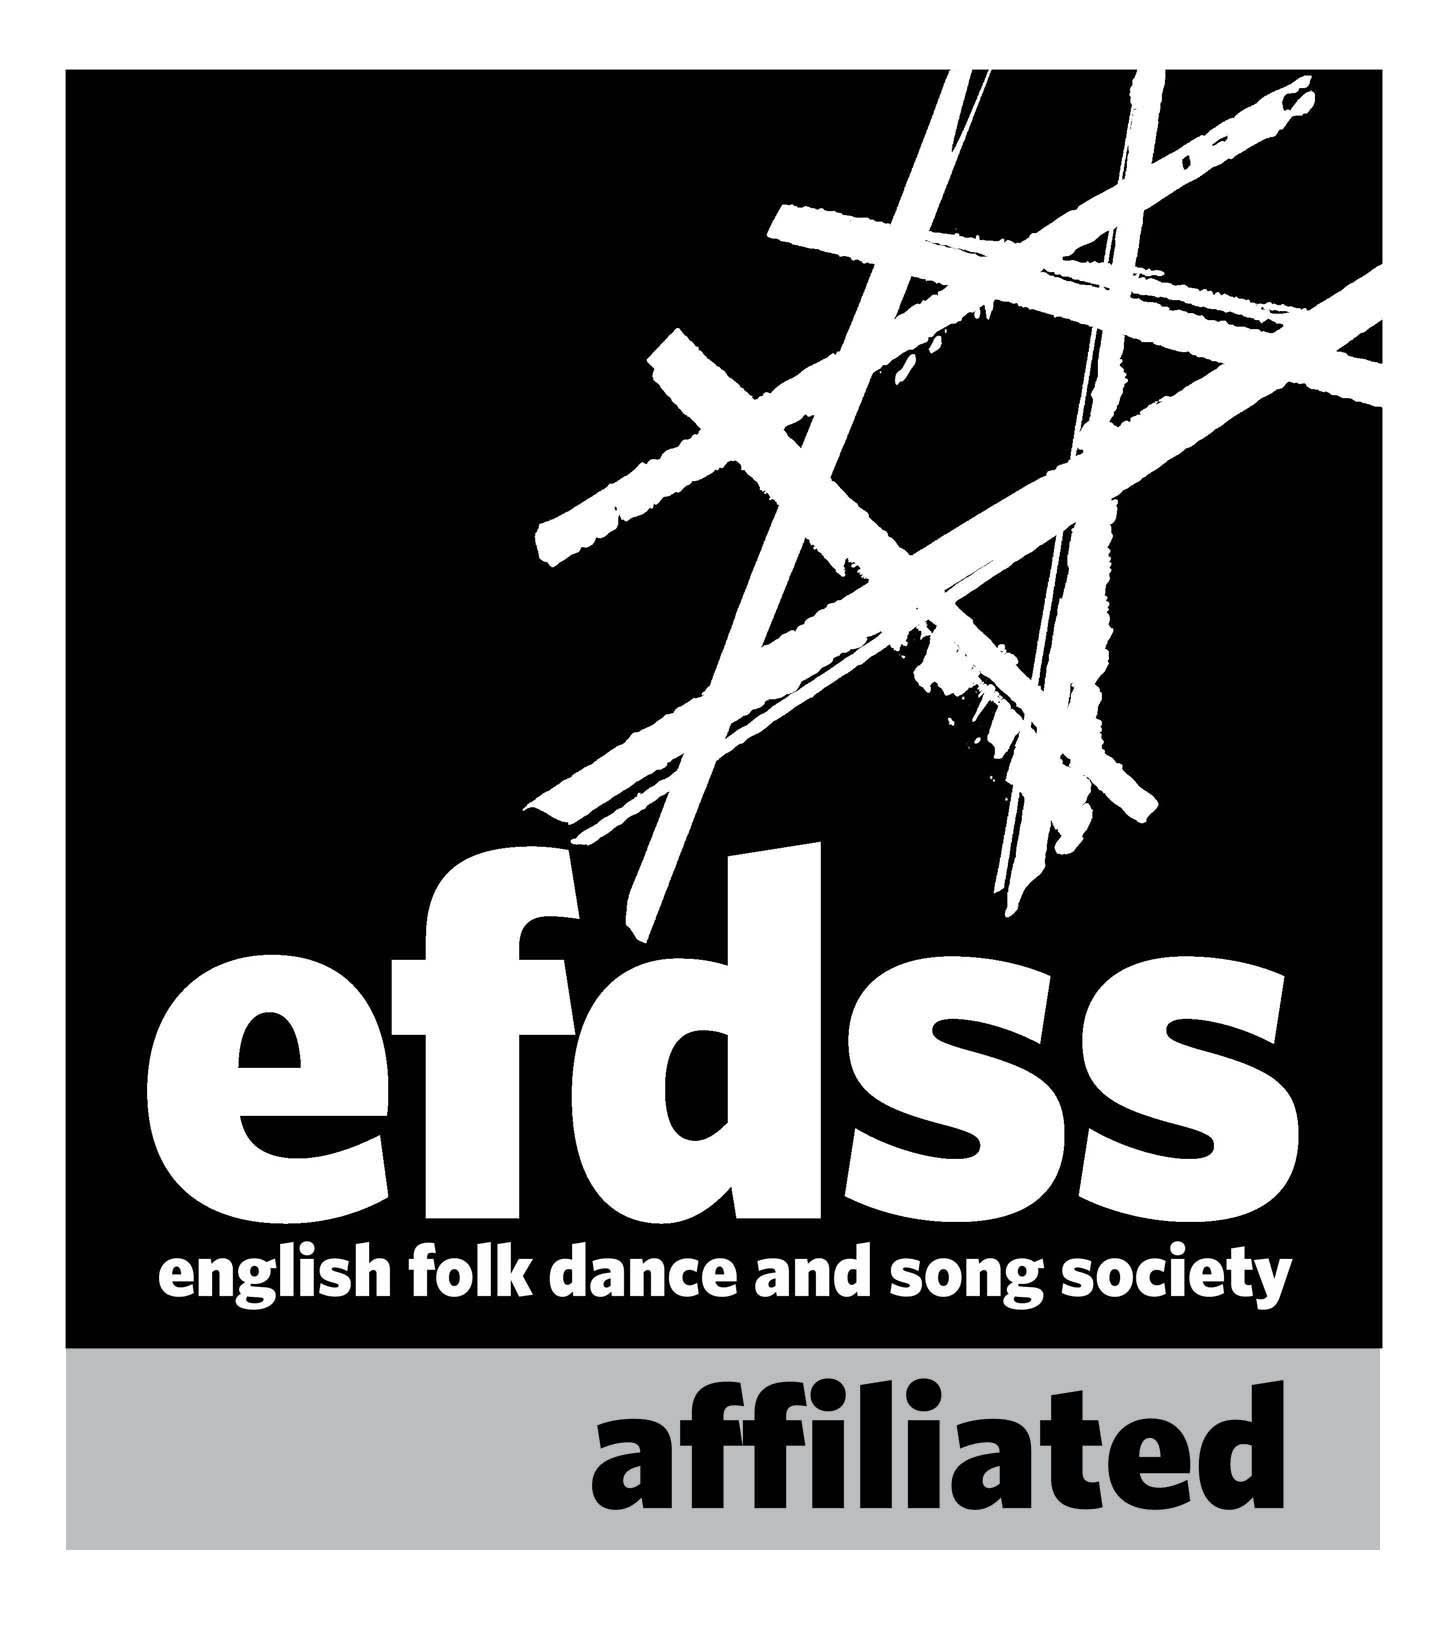 EFDSS-affiliated.jpg